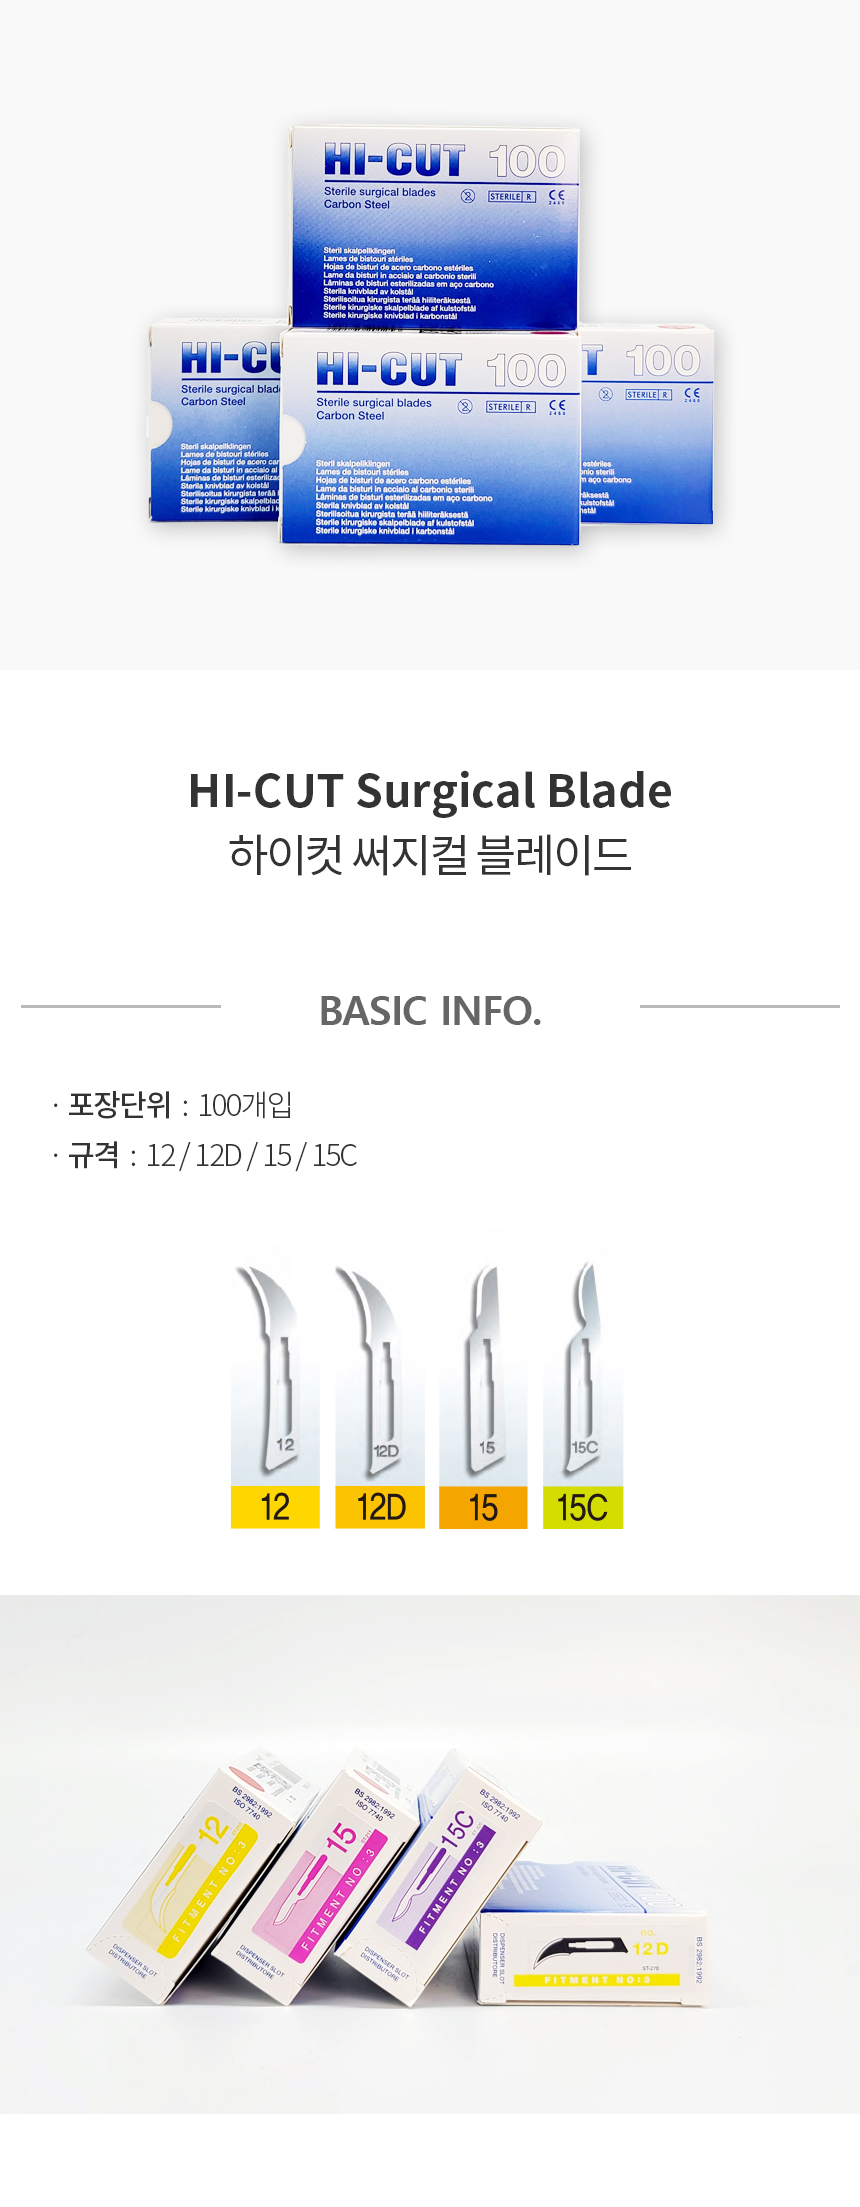 HI-CUT-blade_134211.jpg